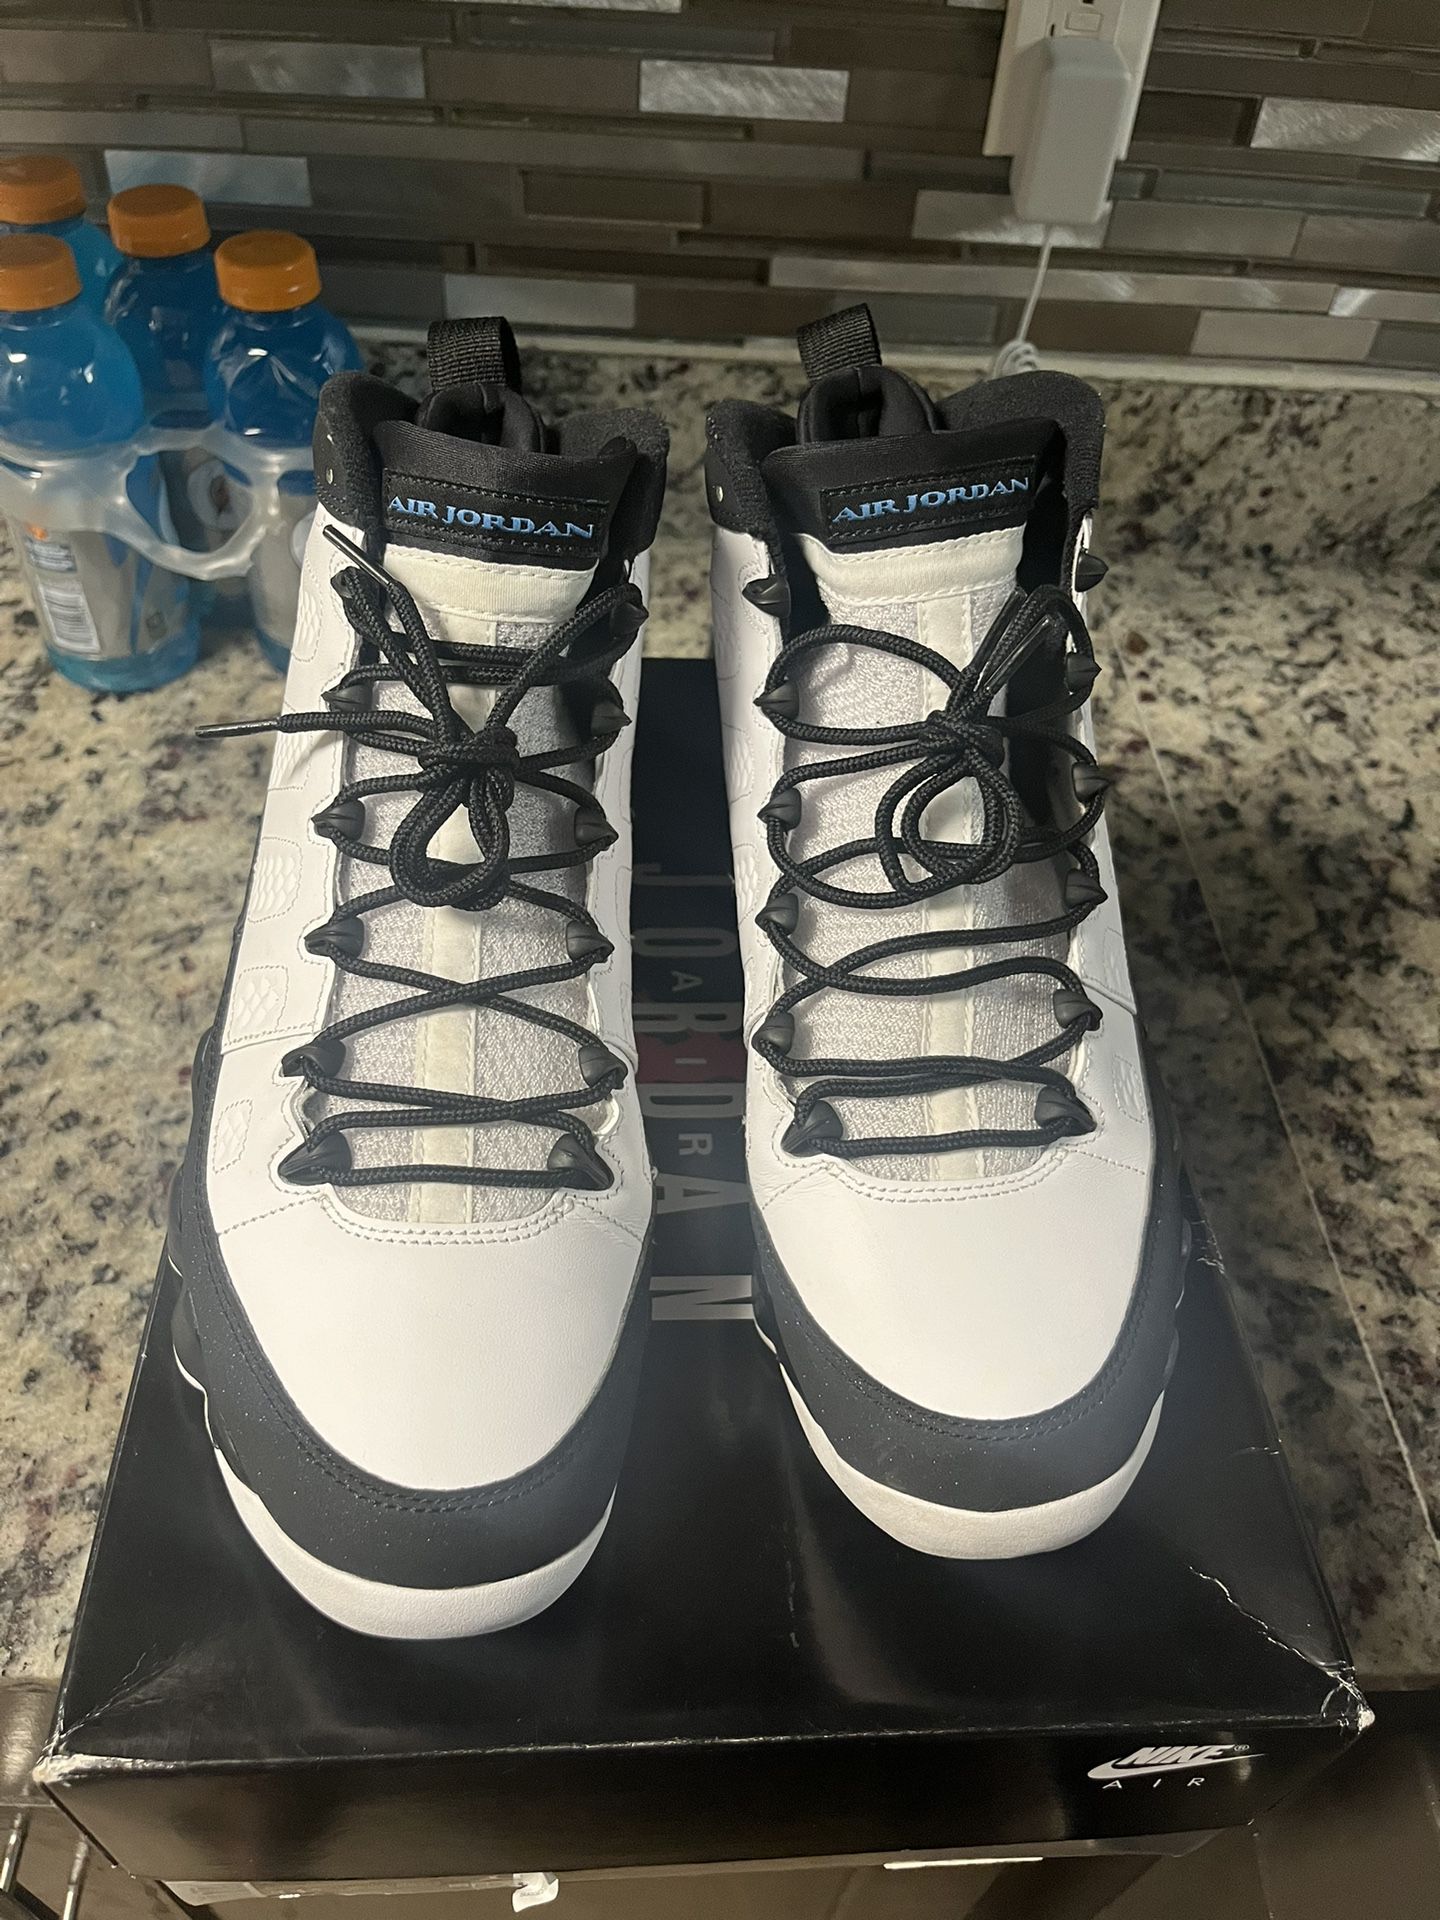 Air Jordan 9 “unc”  Size 11.5 